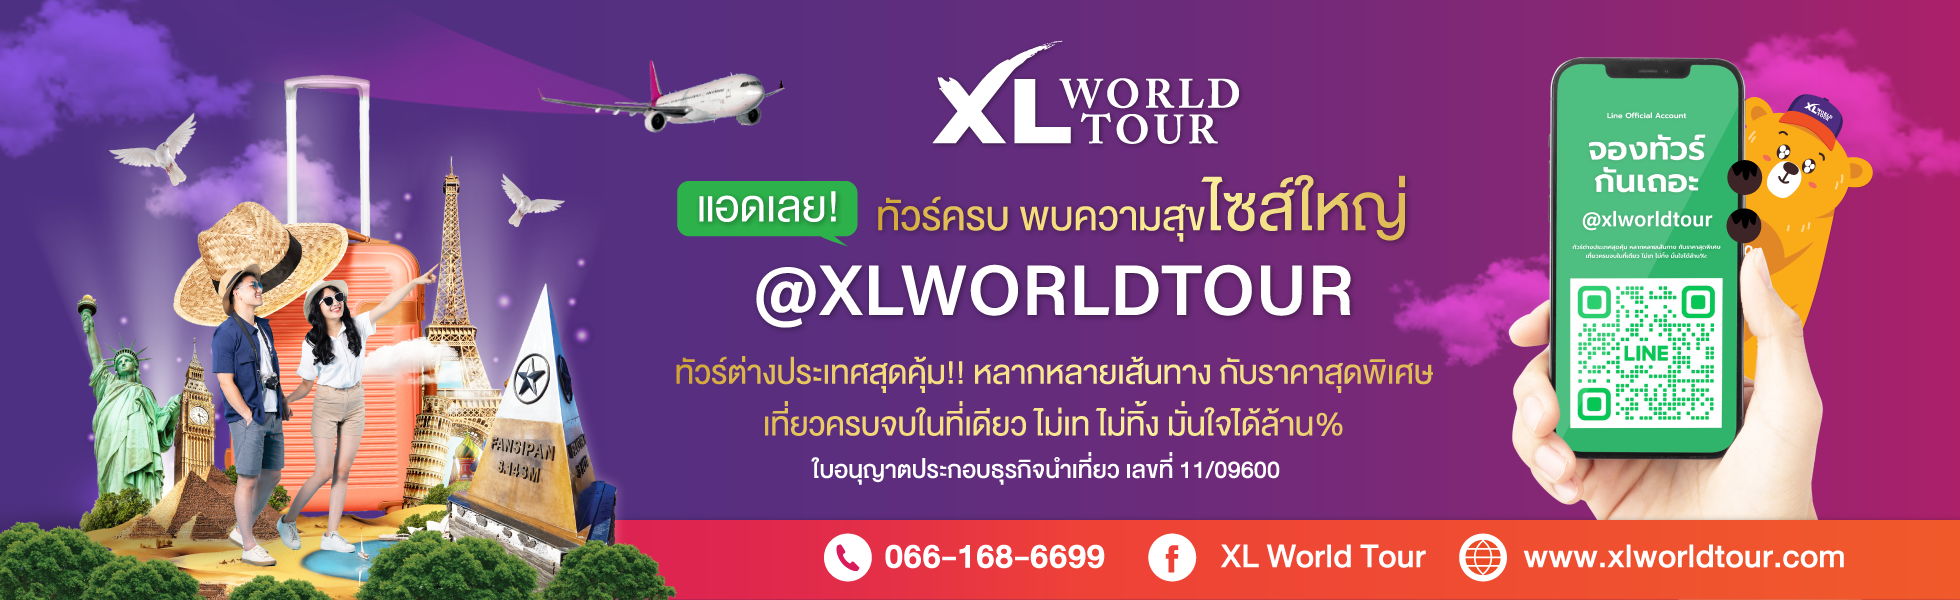 XL WORLD TOUR